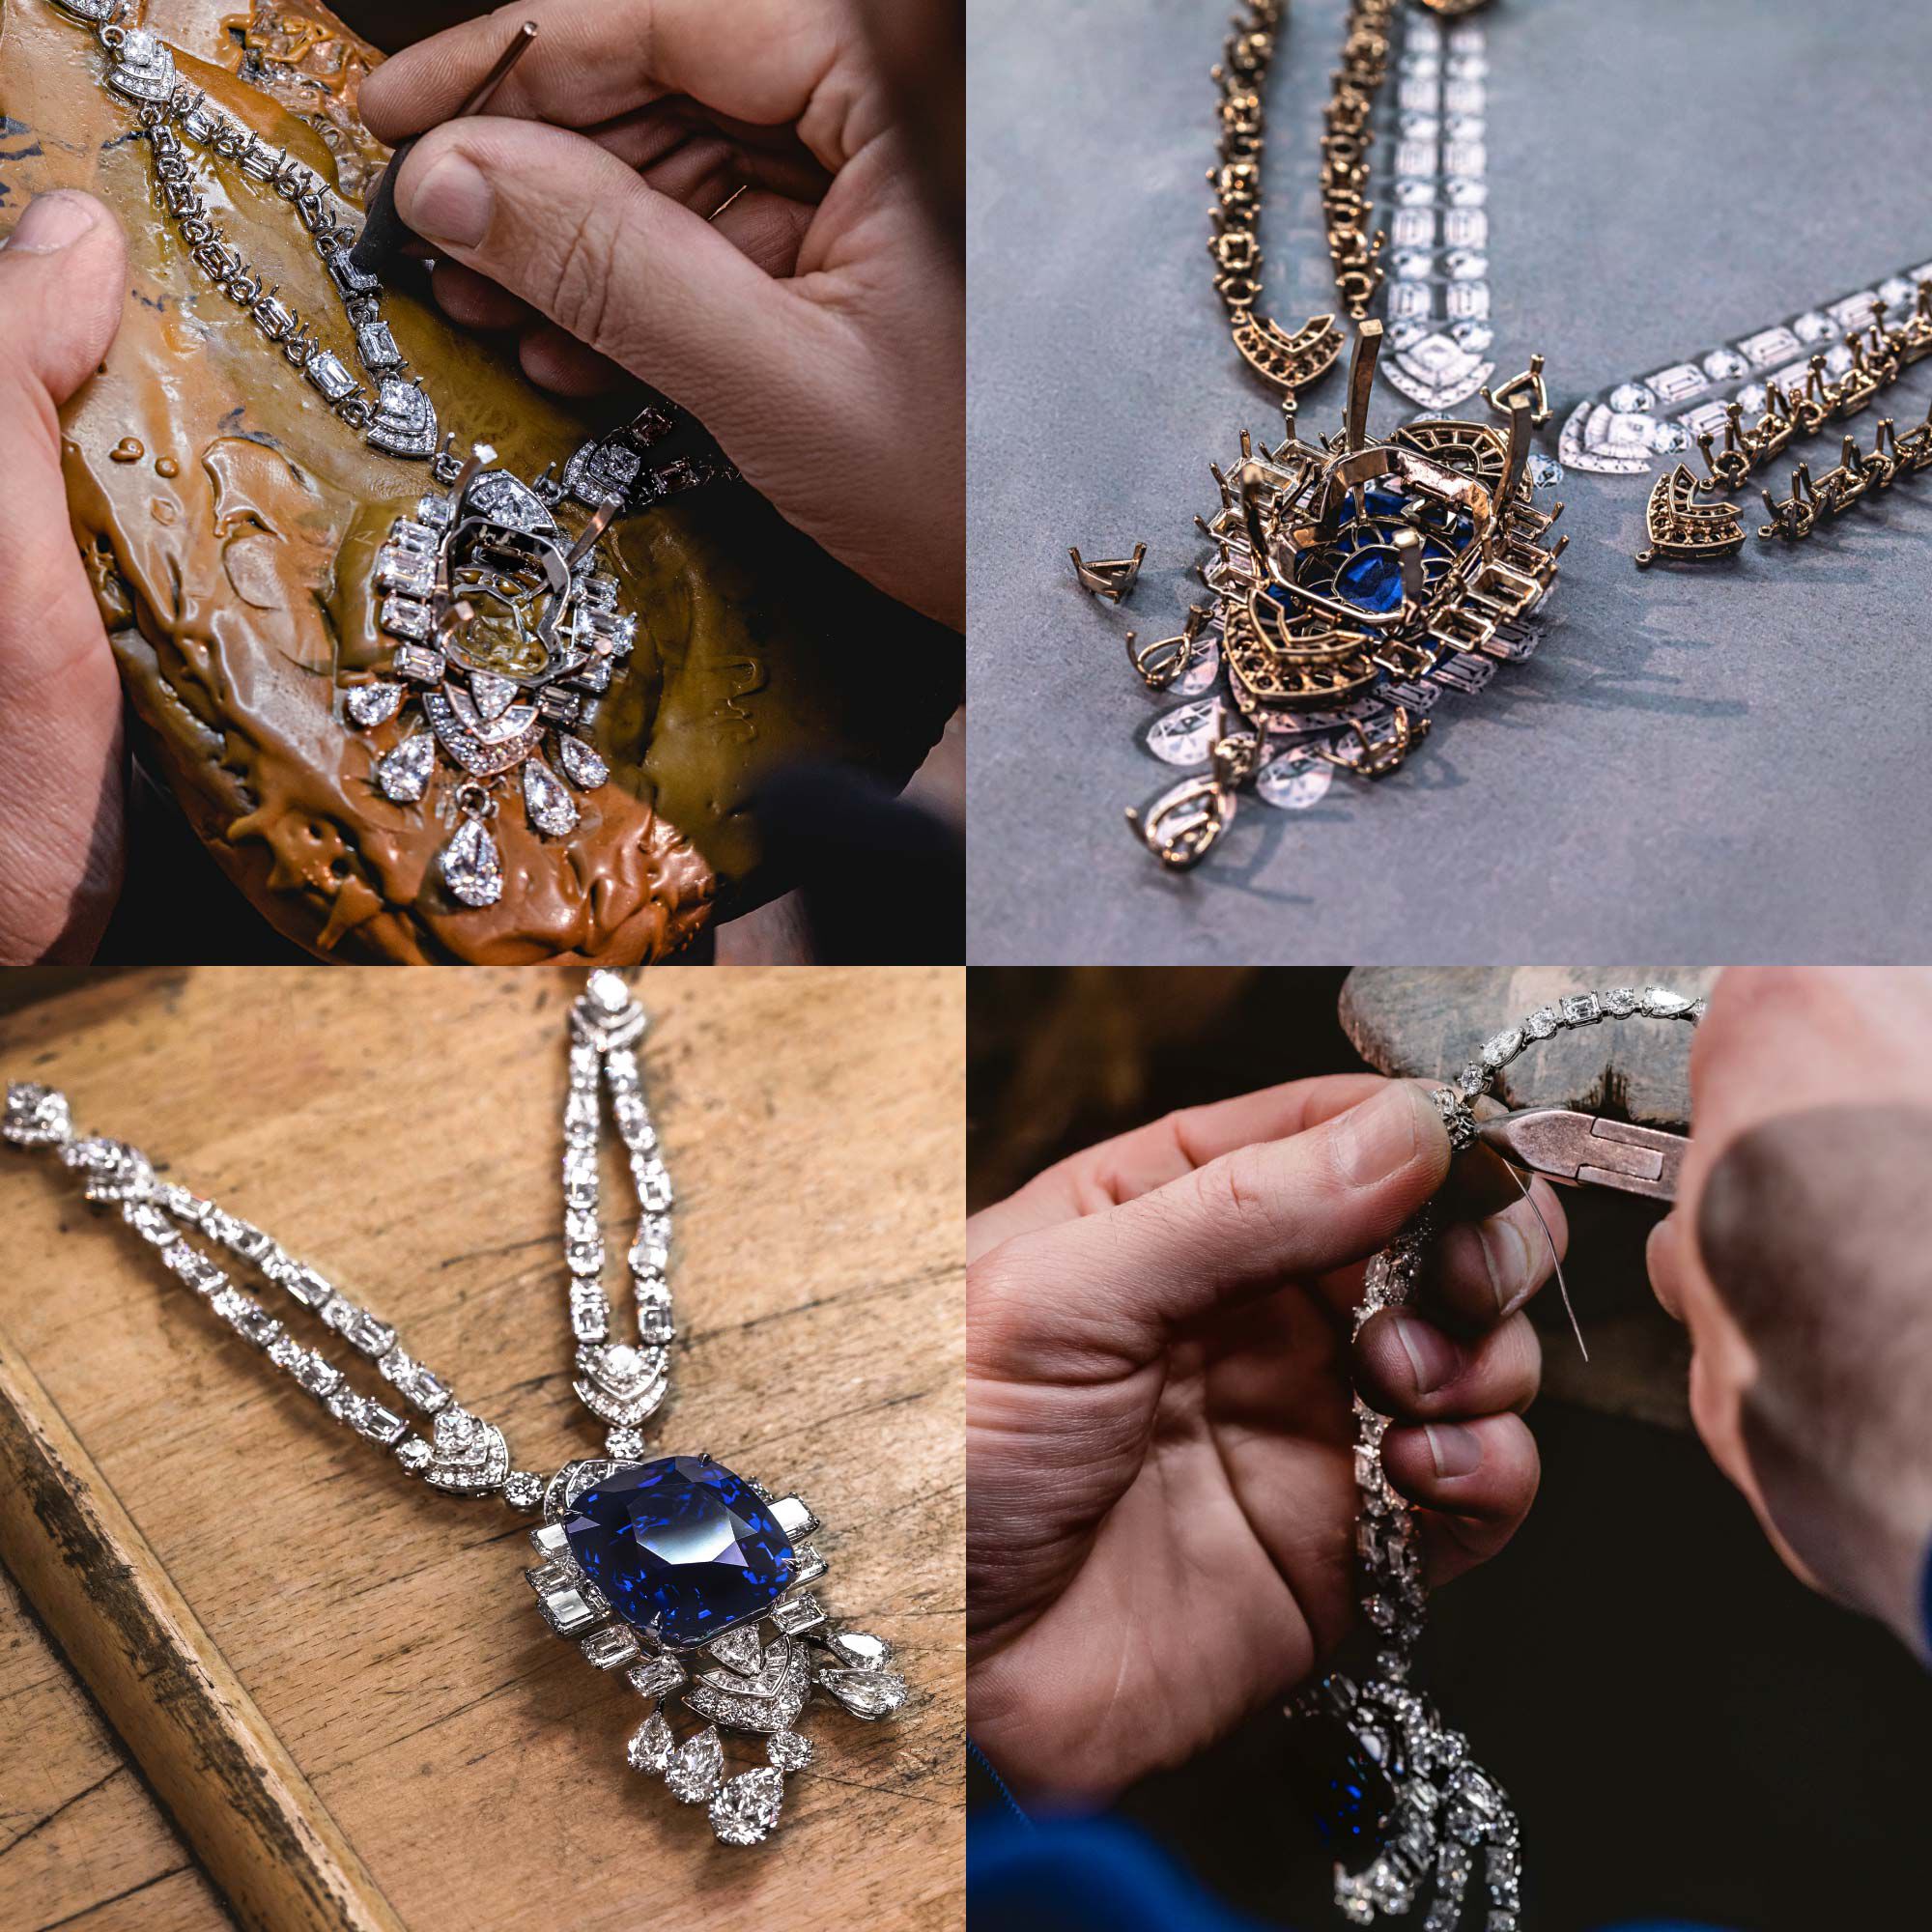 Craftsman making Graff sapphire and white diamond high jewellery